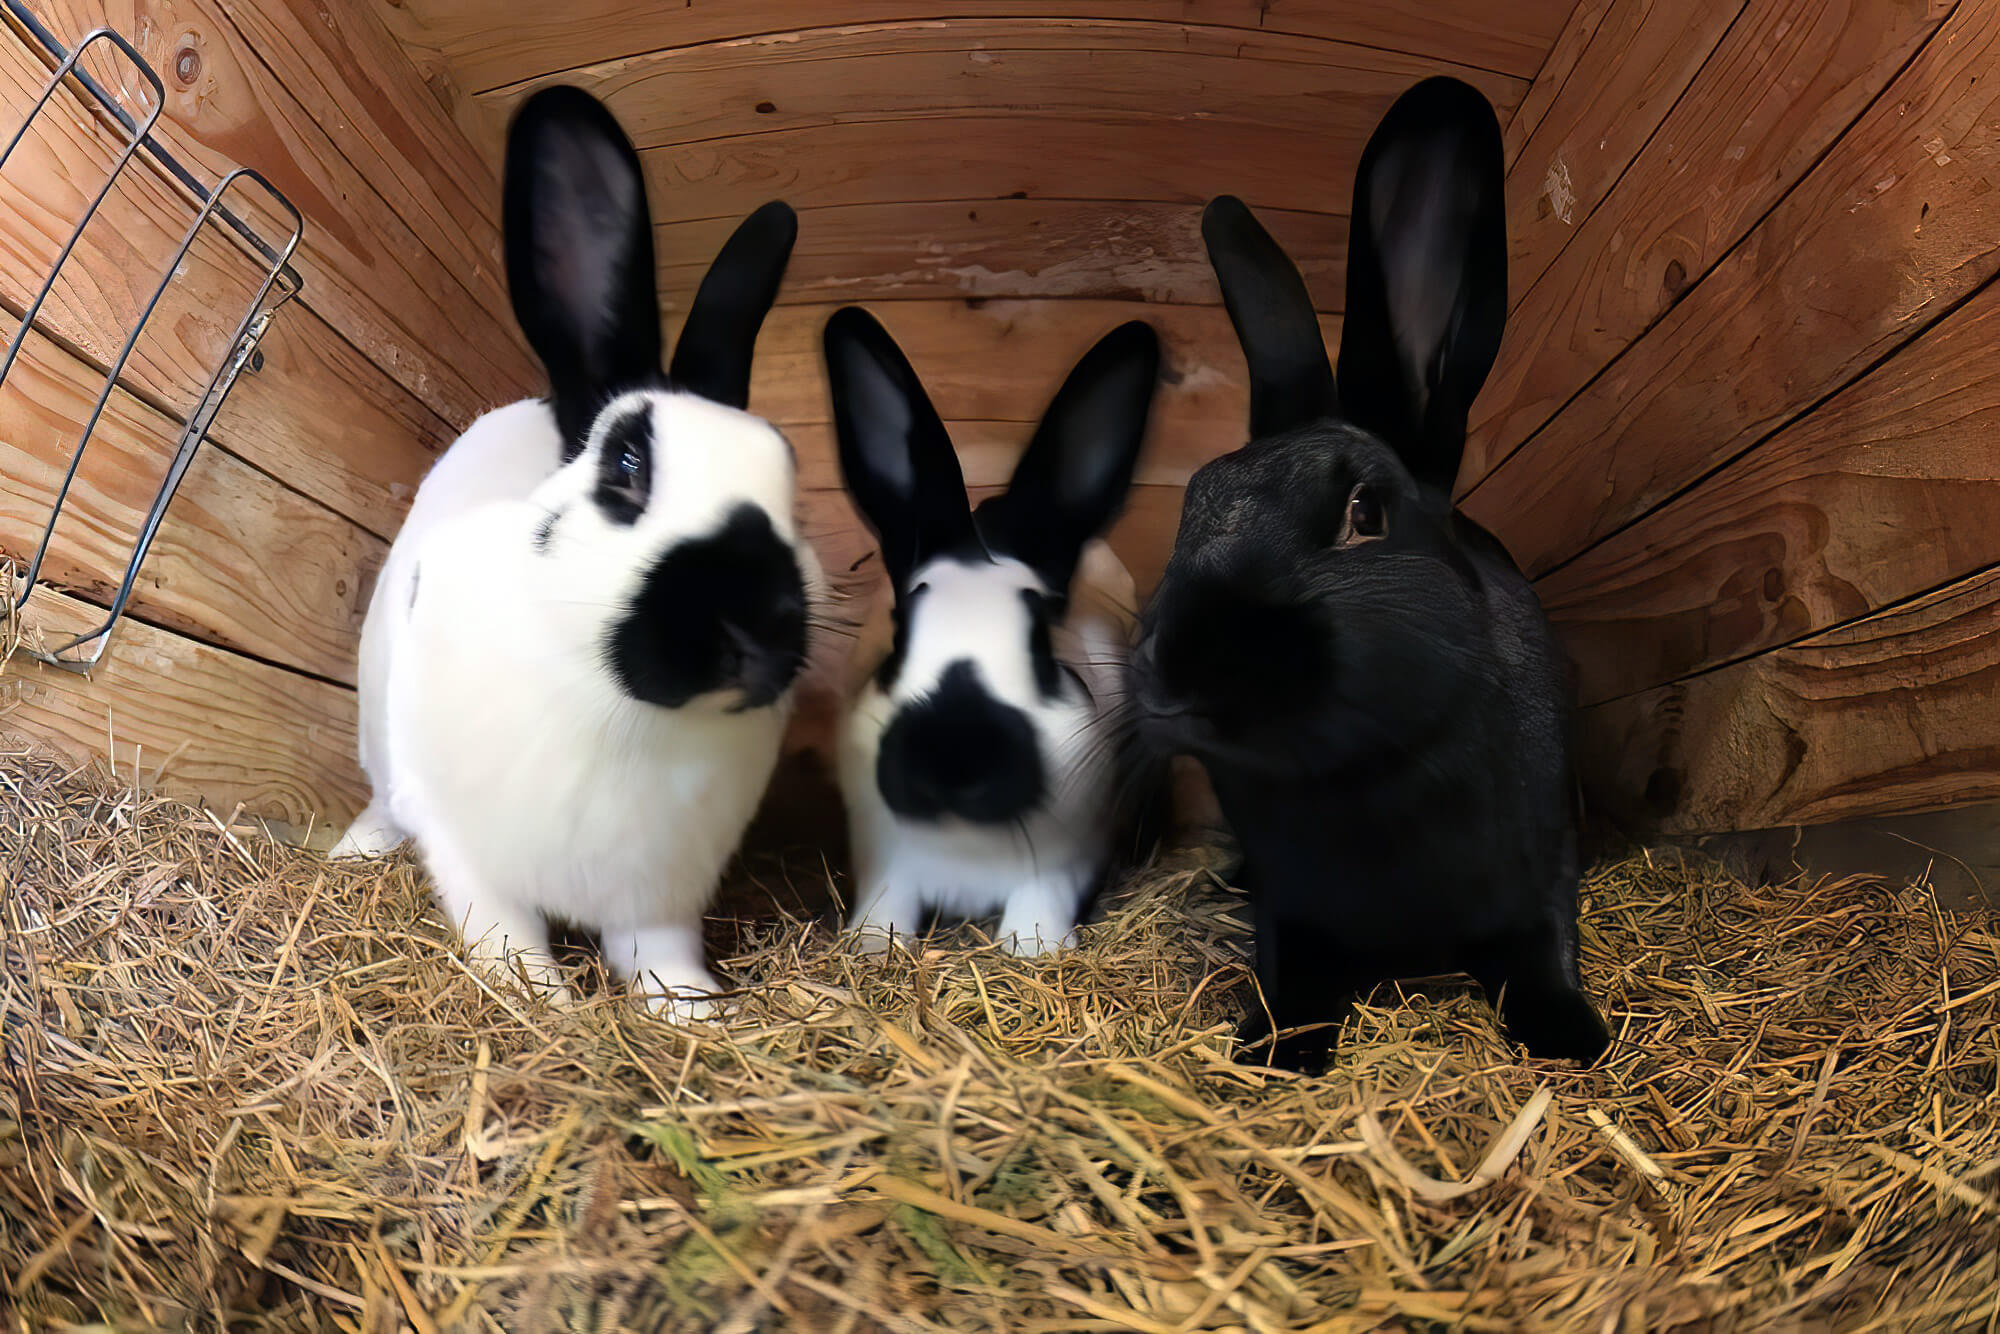 https://zeve.au/planetpet/uploads/three-rabbits-in-box-with-straw.jpg